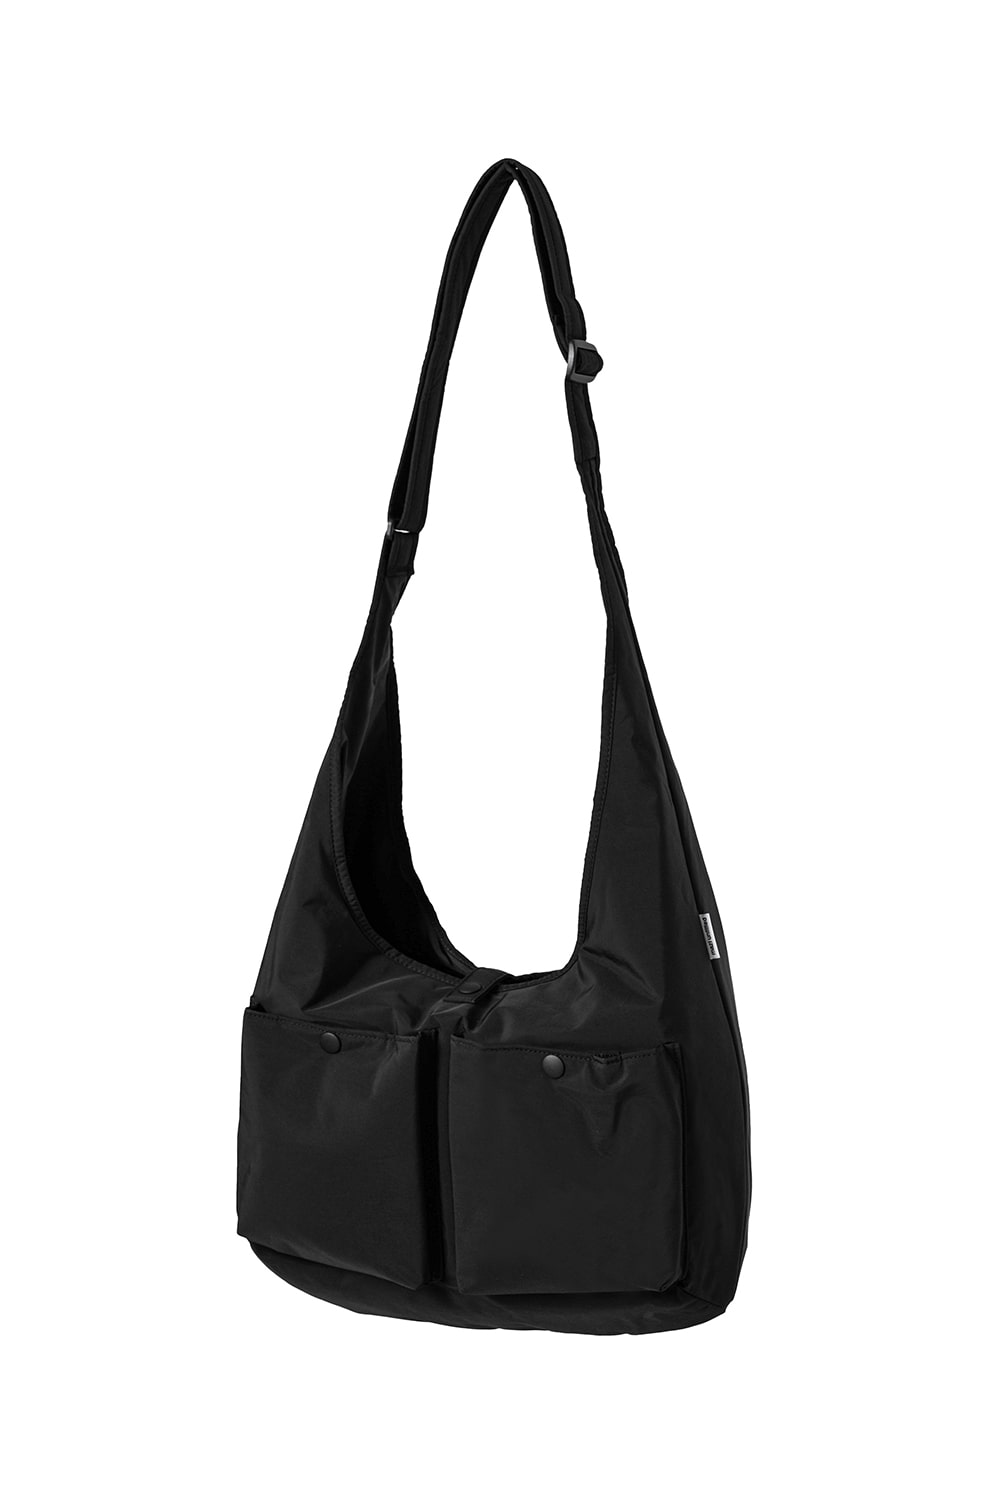 padded bore bag cross (black)